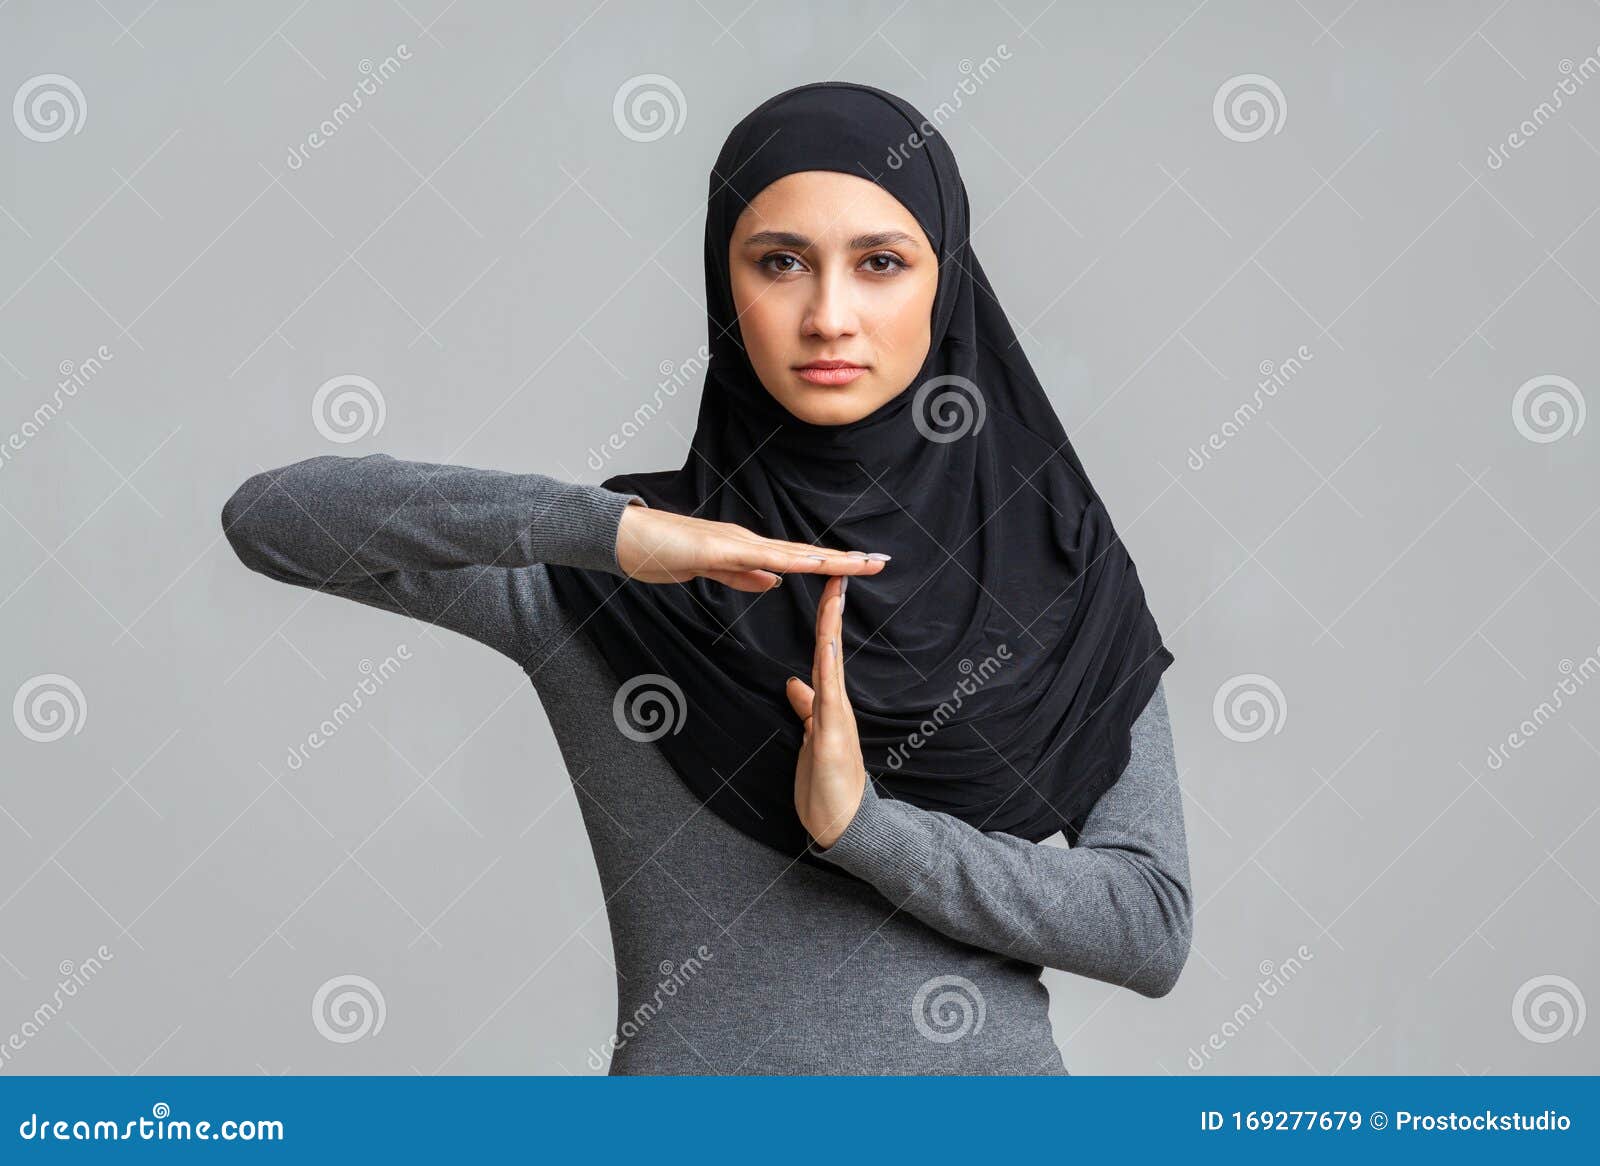  Muslim girl showing